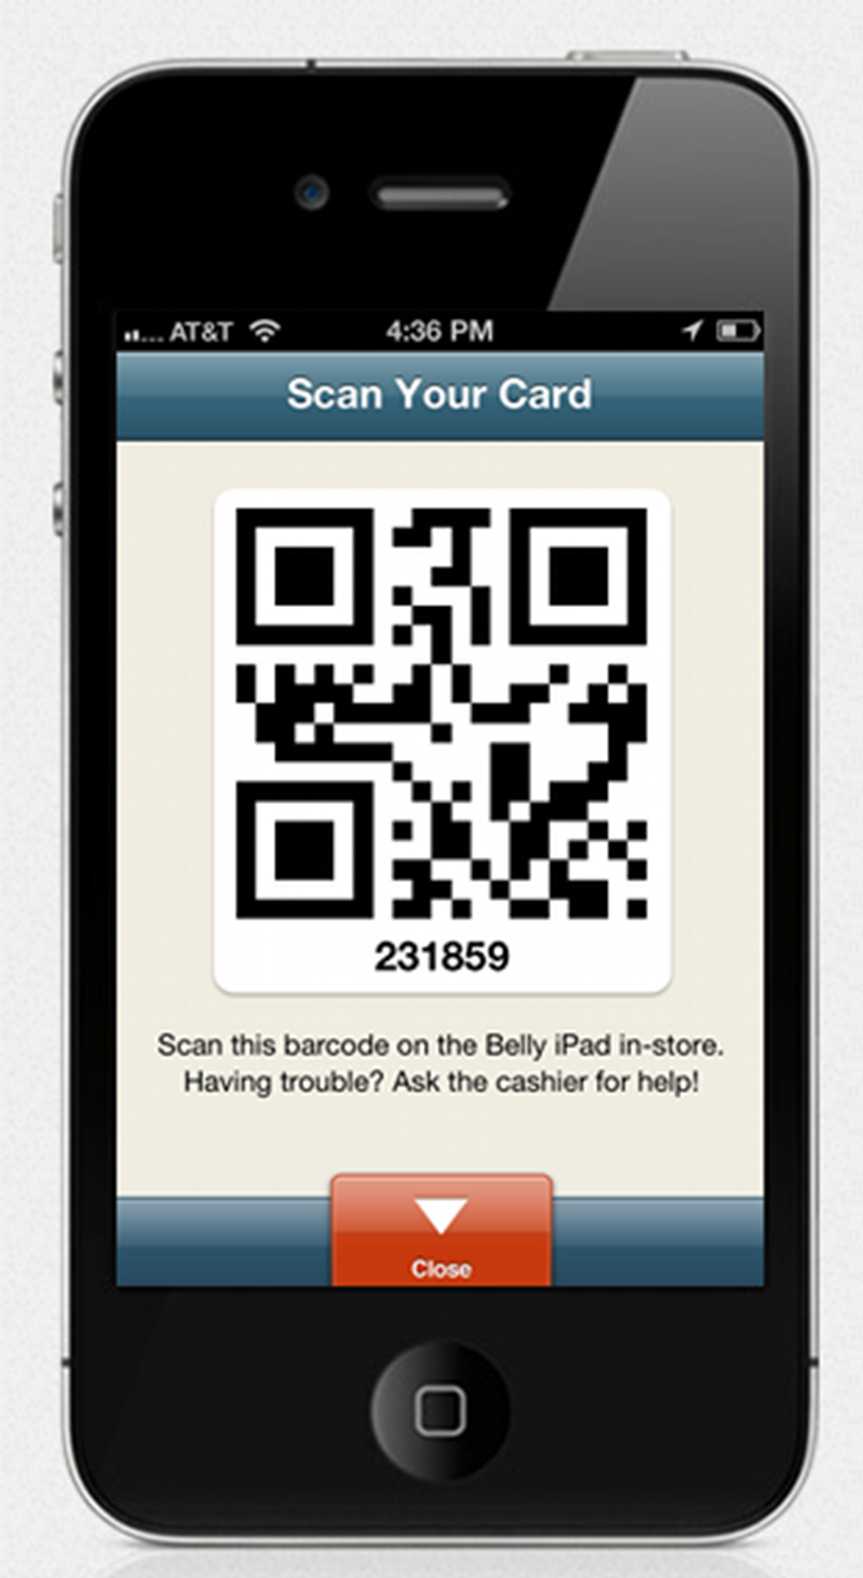 Medical Alert Wallet Card Template ] – Pics Photos Free Intended For Medical Alert Wallet Card Template